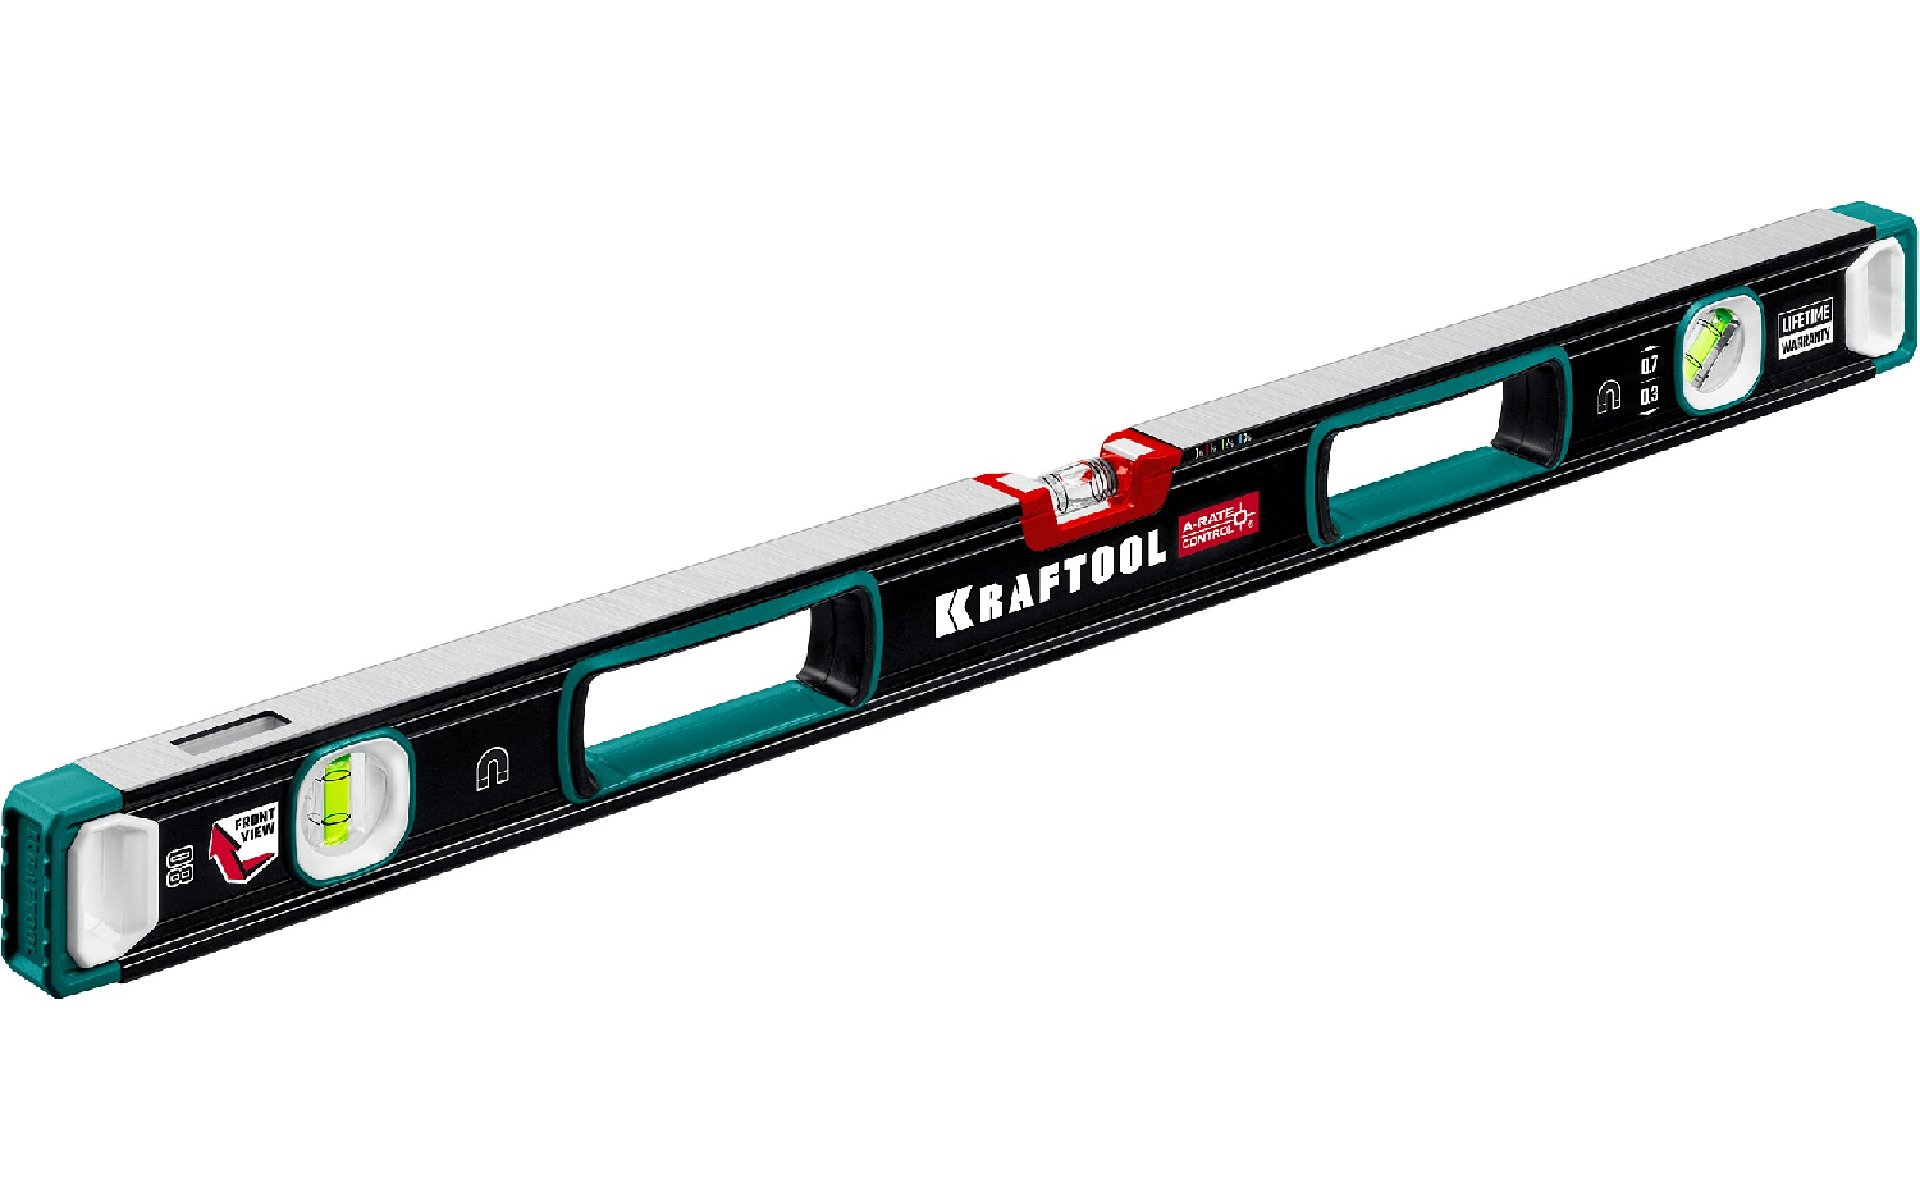    KRAFTOOL A-Rate Control    800  (34988-80)